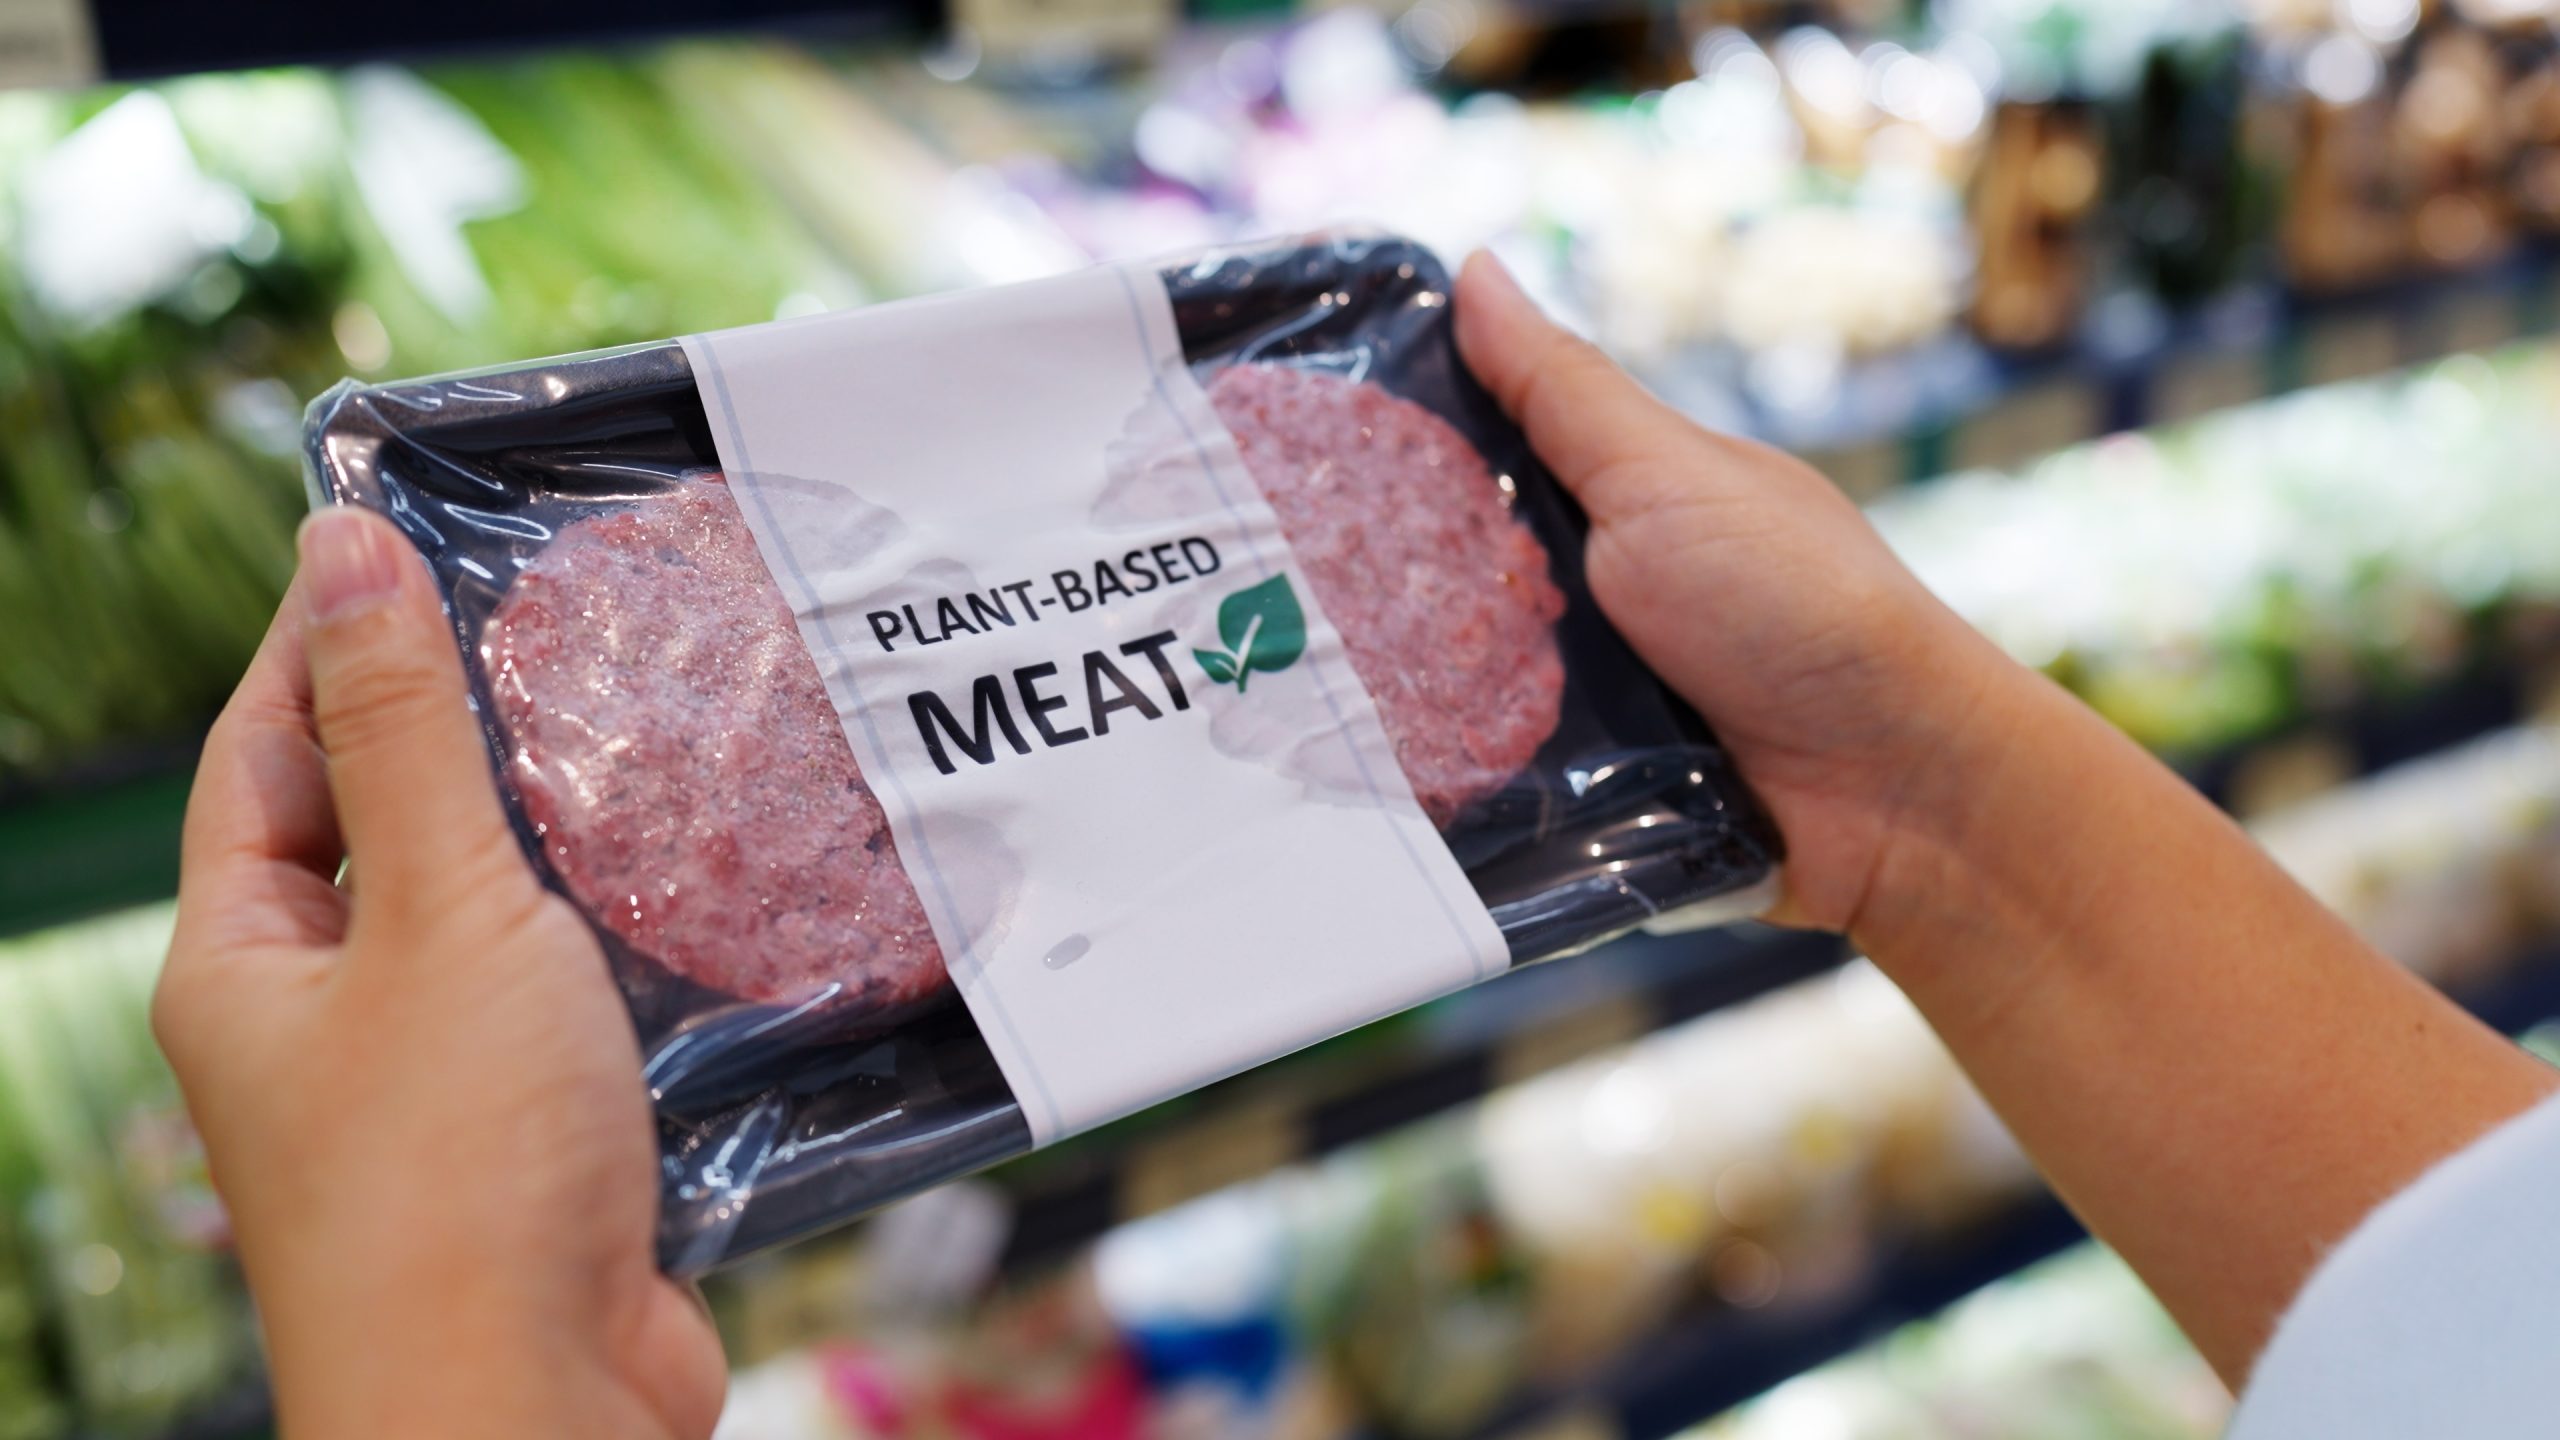 European want meat alternatives, survey finds